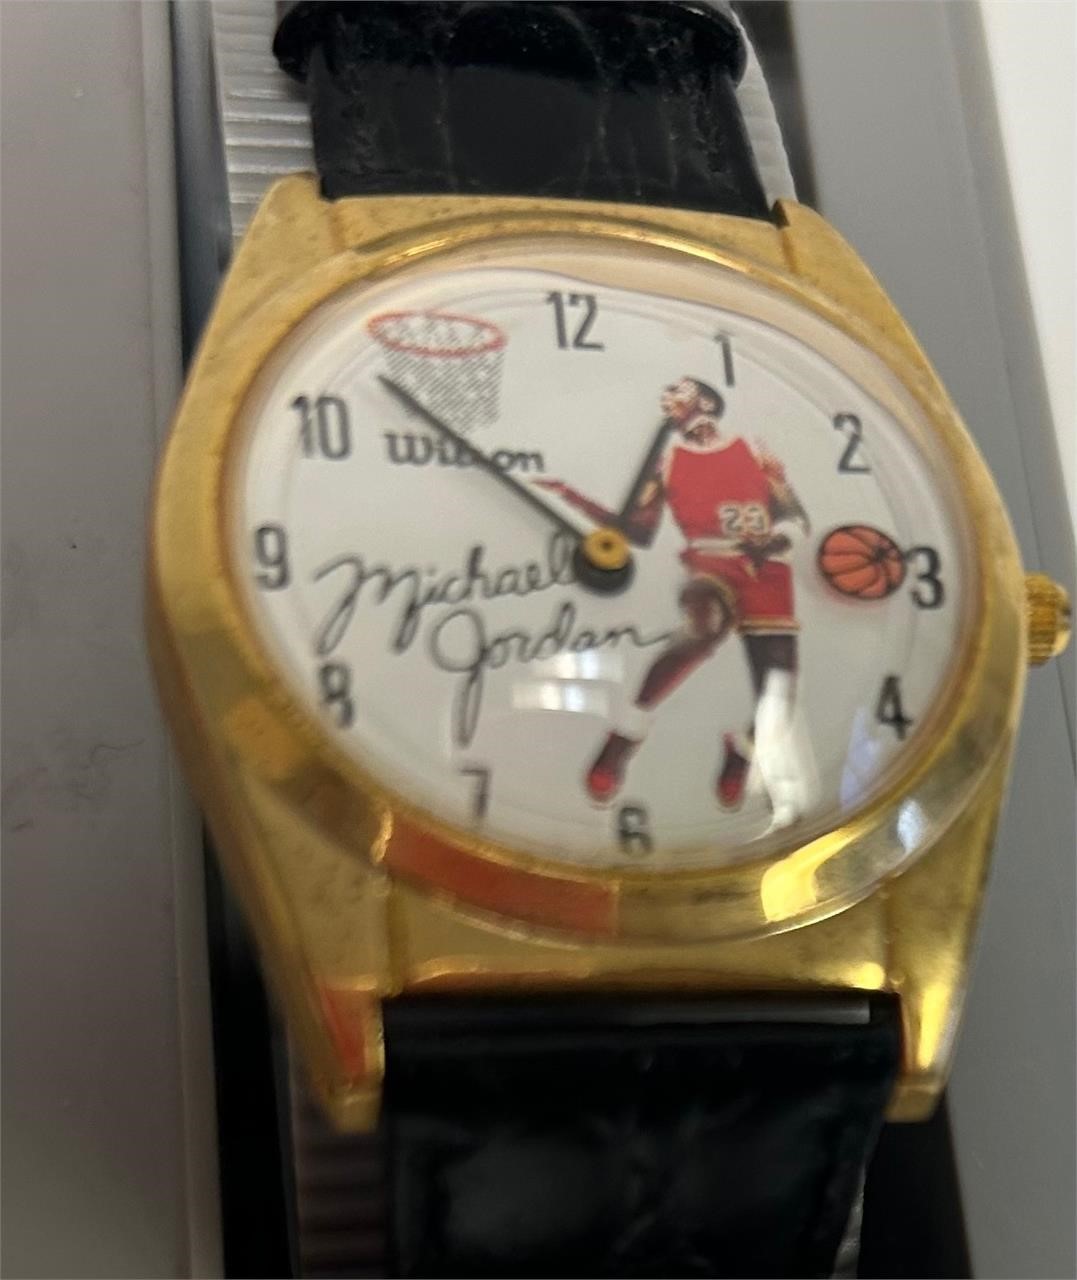 Wilson Gold Michael Jordan watch. Vintage